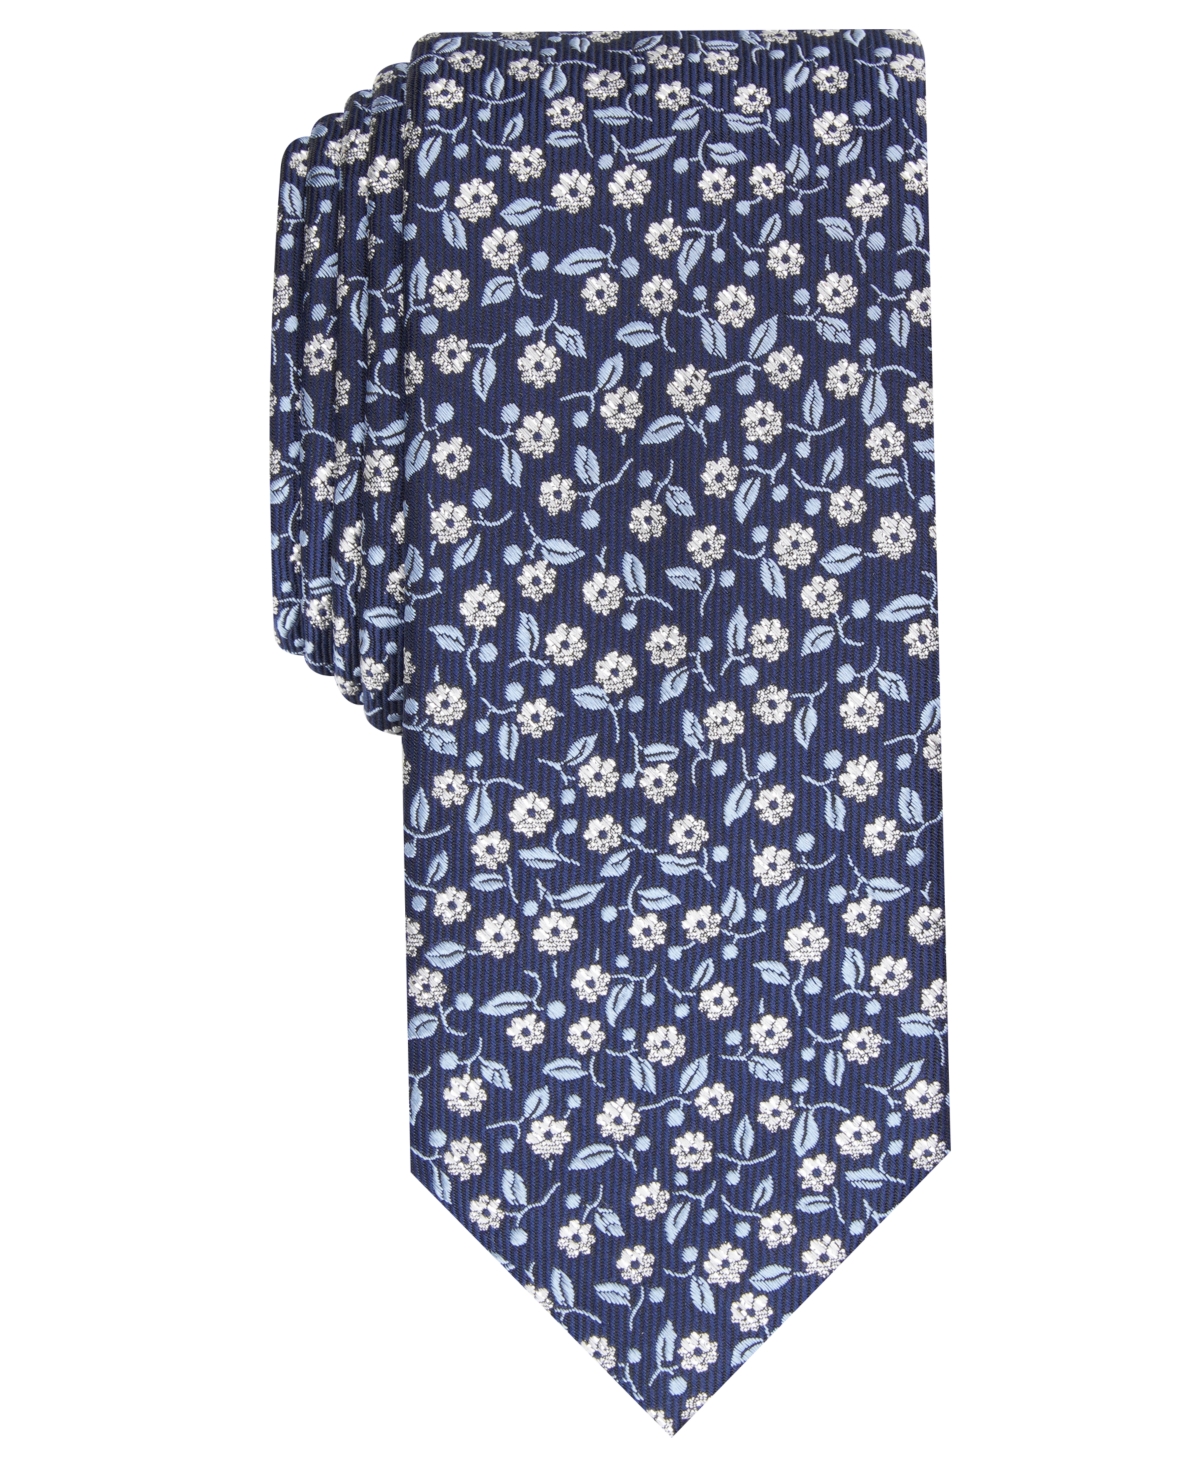 Men's Magnolia Skinny Floral Tie, Created for Macy's - Navy